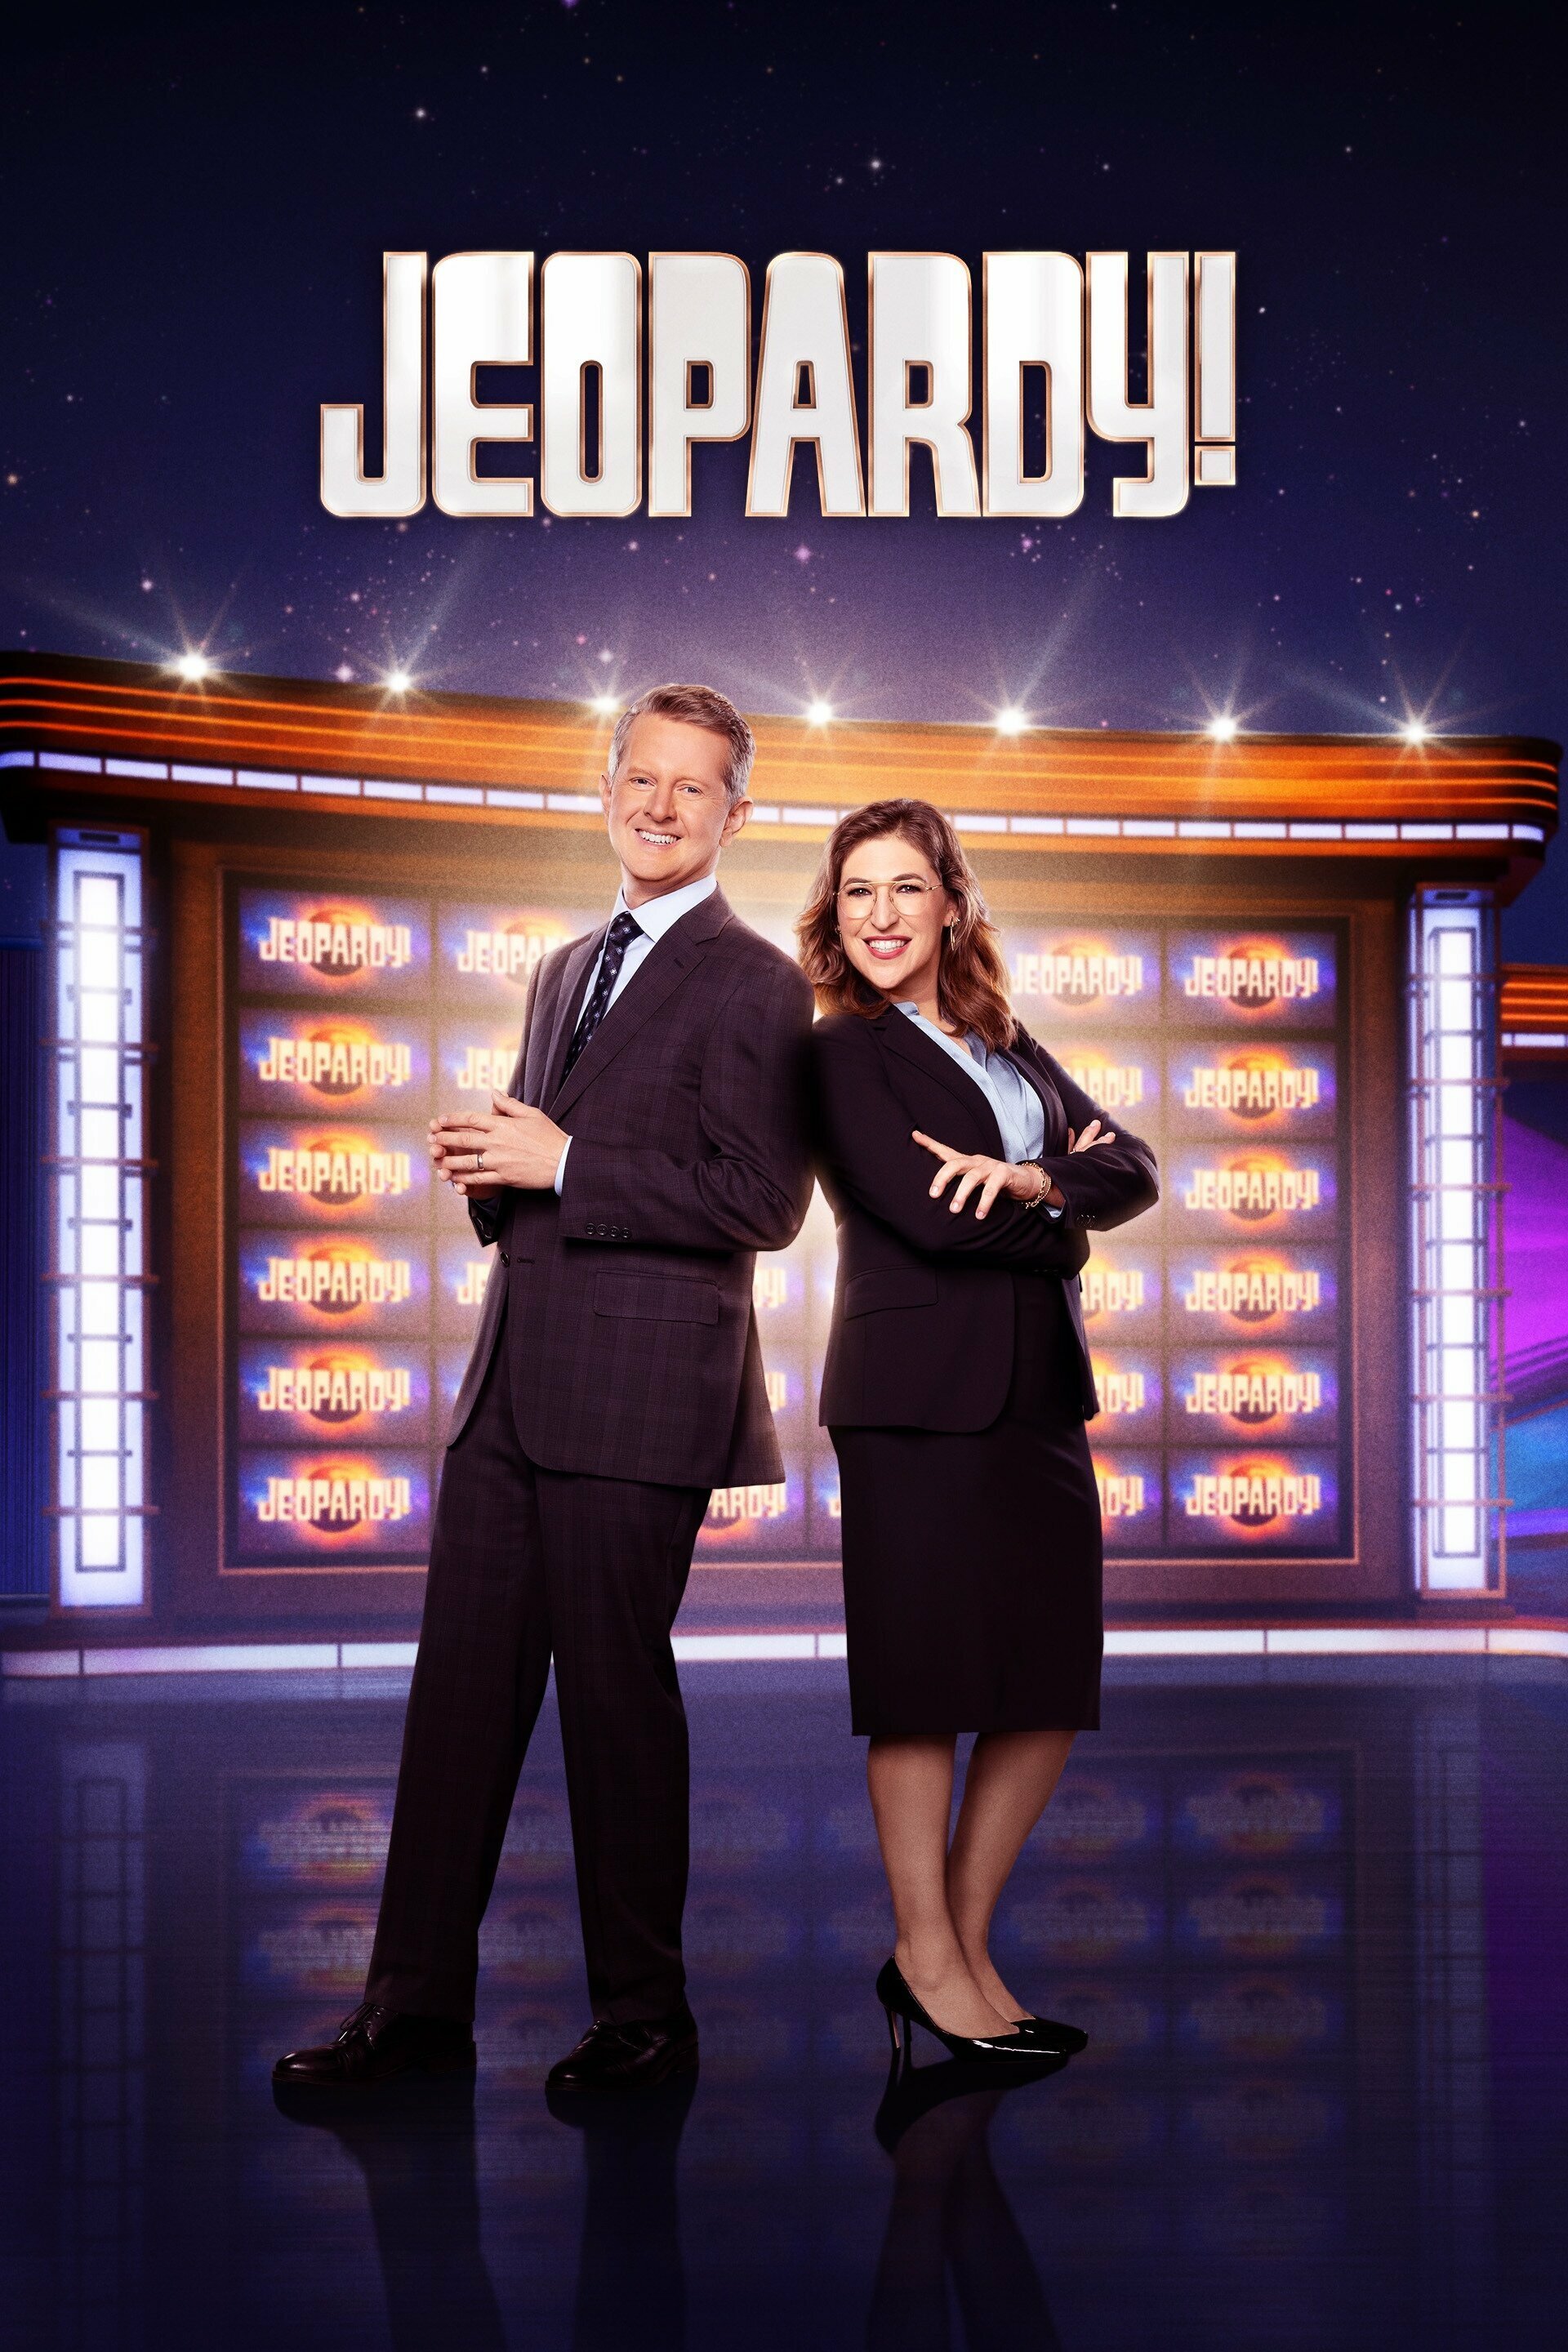 Jeopardy! Next Episode